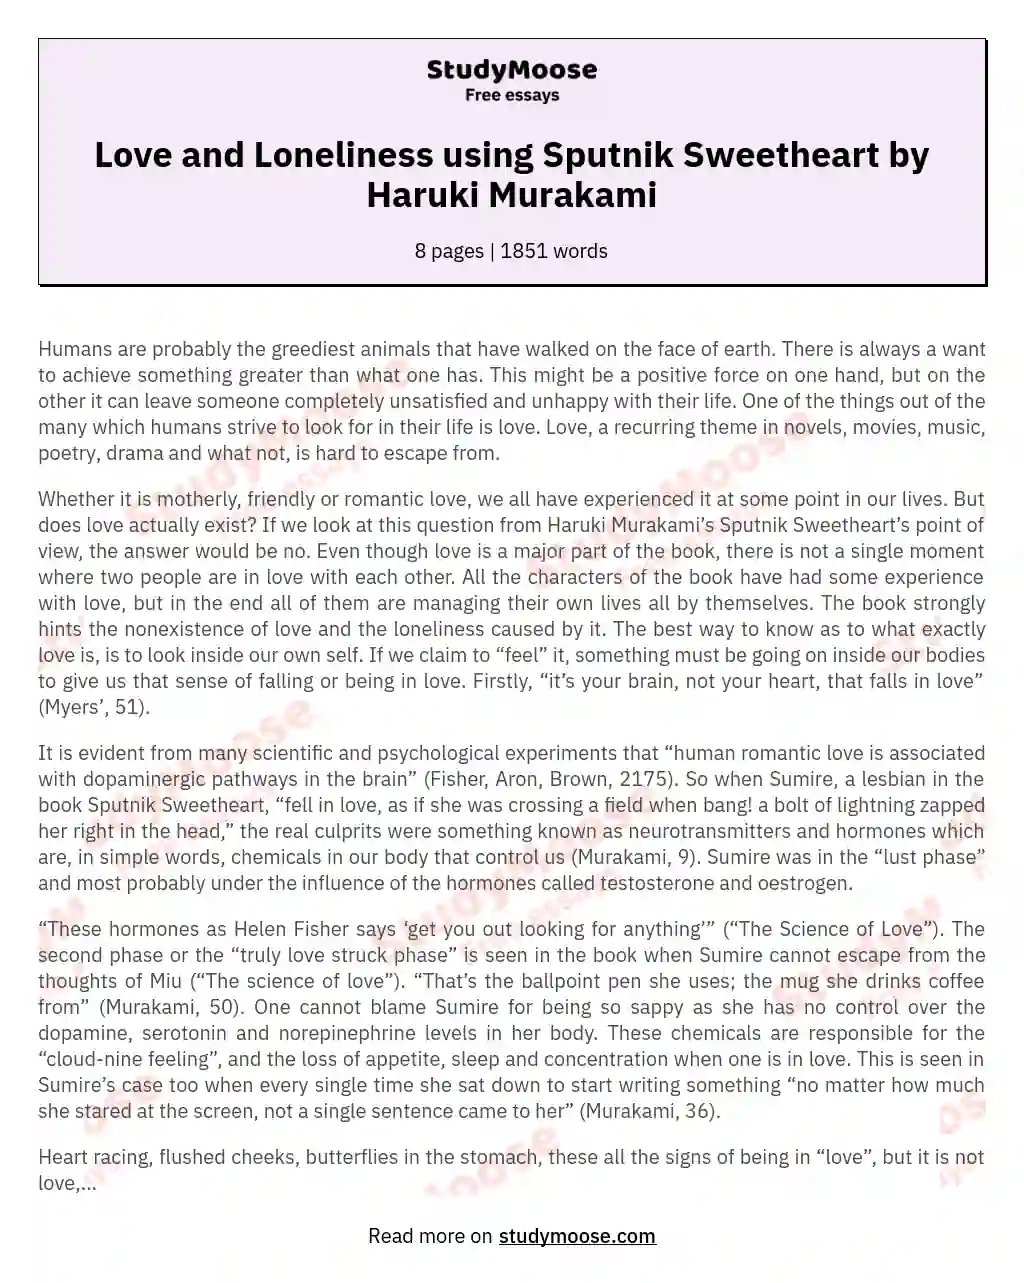 Love and Loneliness using Sputnik Sweetheart by Haruki Murakami essay